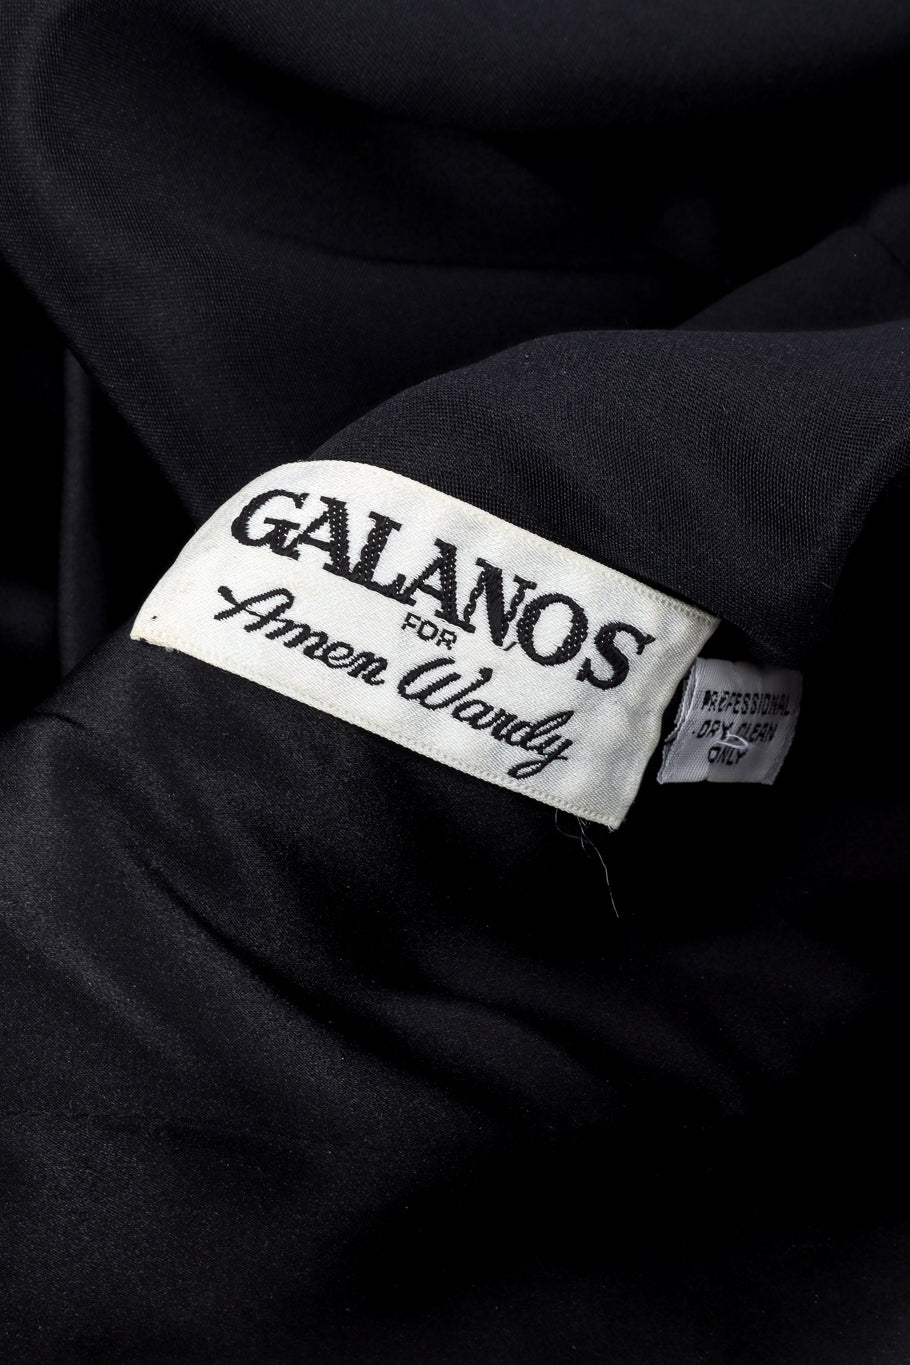 Vintage Galanos Gathered Taffeta Top signature label closeup @recessla